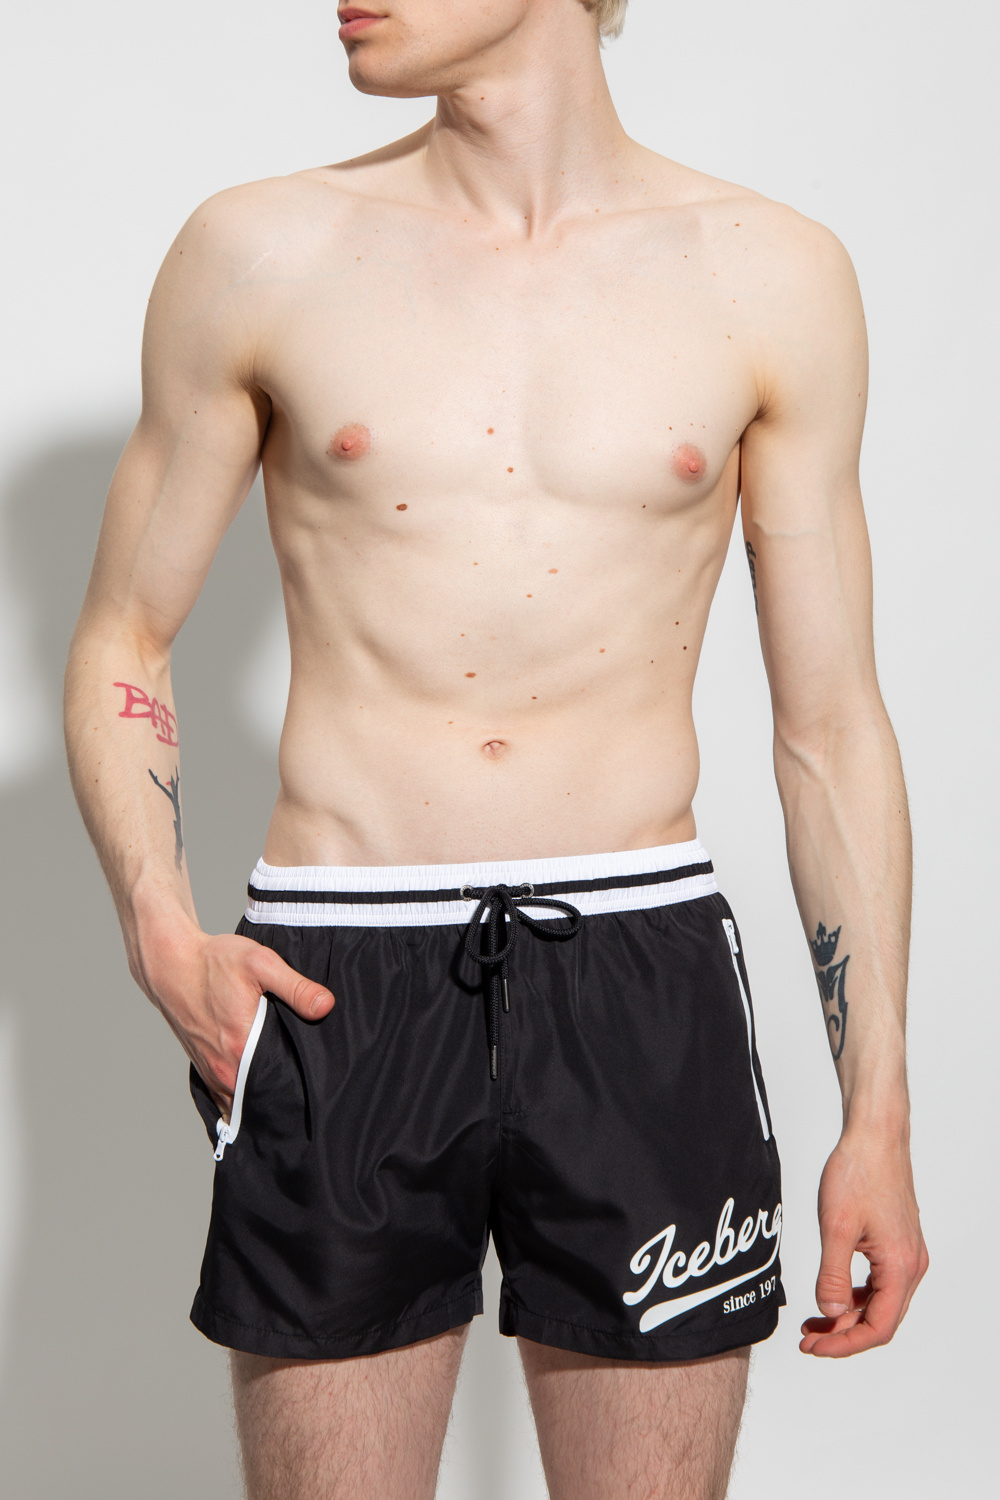 Iceberg print | | Swim checkerboard Men\'s shorts | Anderson Clothing JW StclaircomoShops hoodie